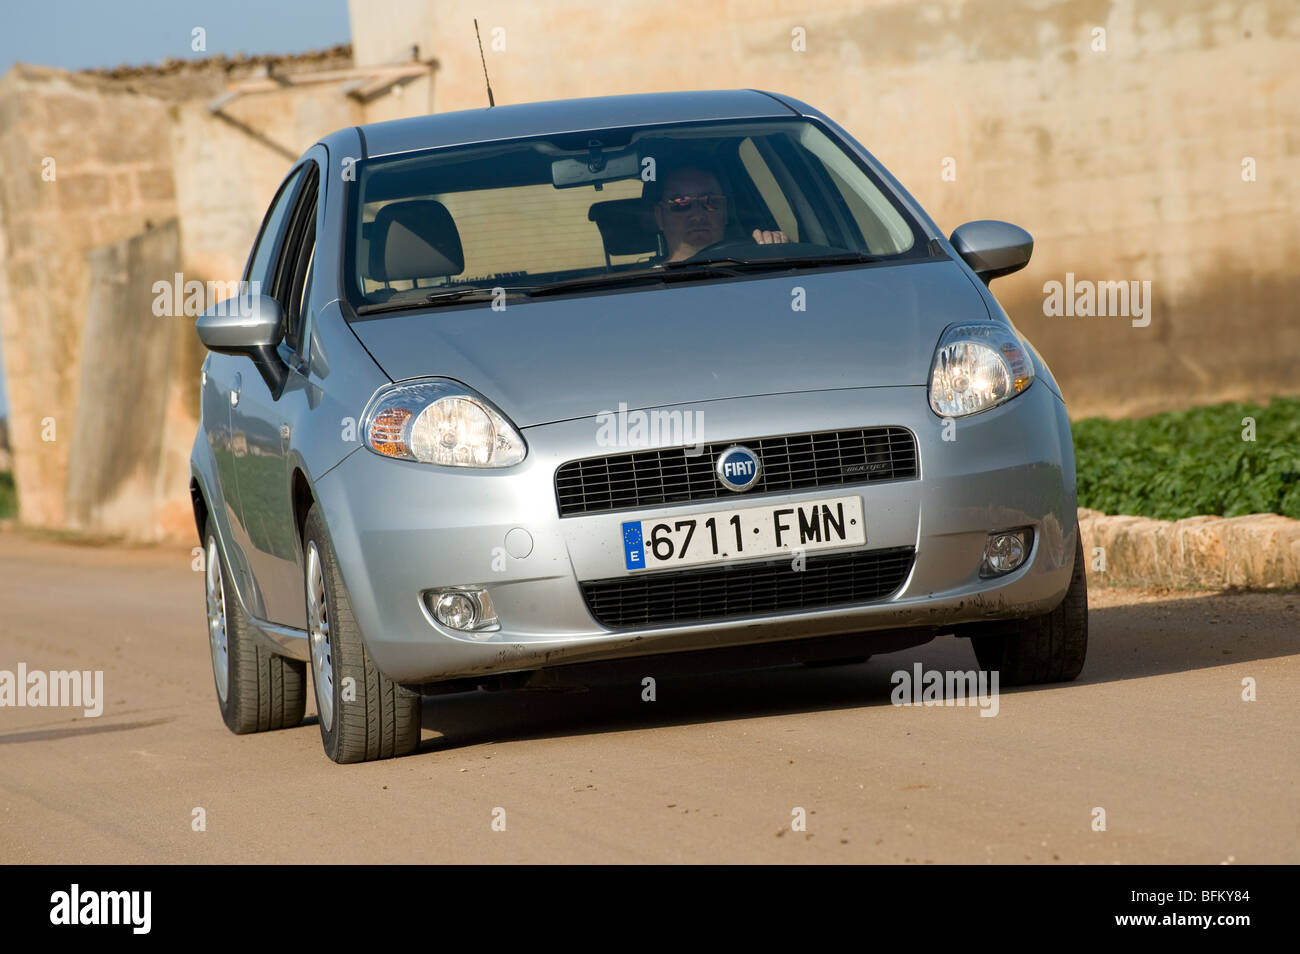 Silver Fiat Punto being driven along a road in Mallorca, Majorca, Spain. Stock Photo